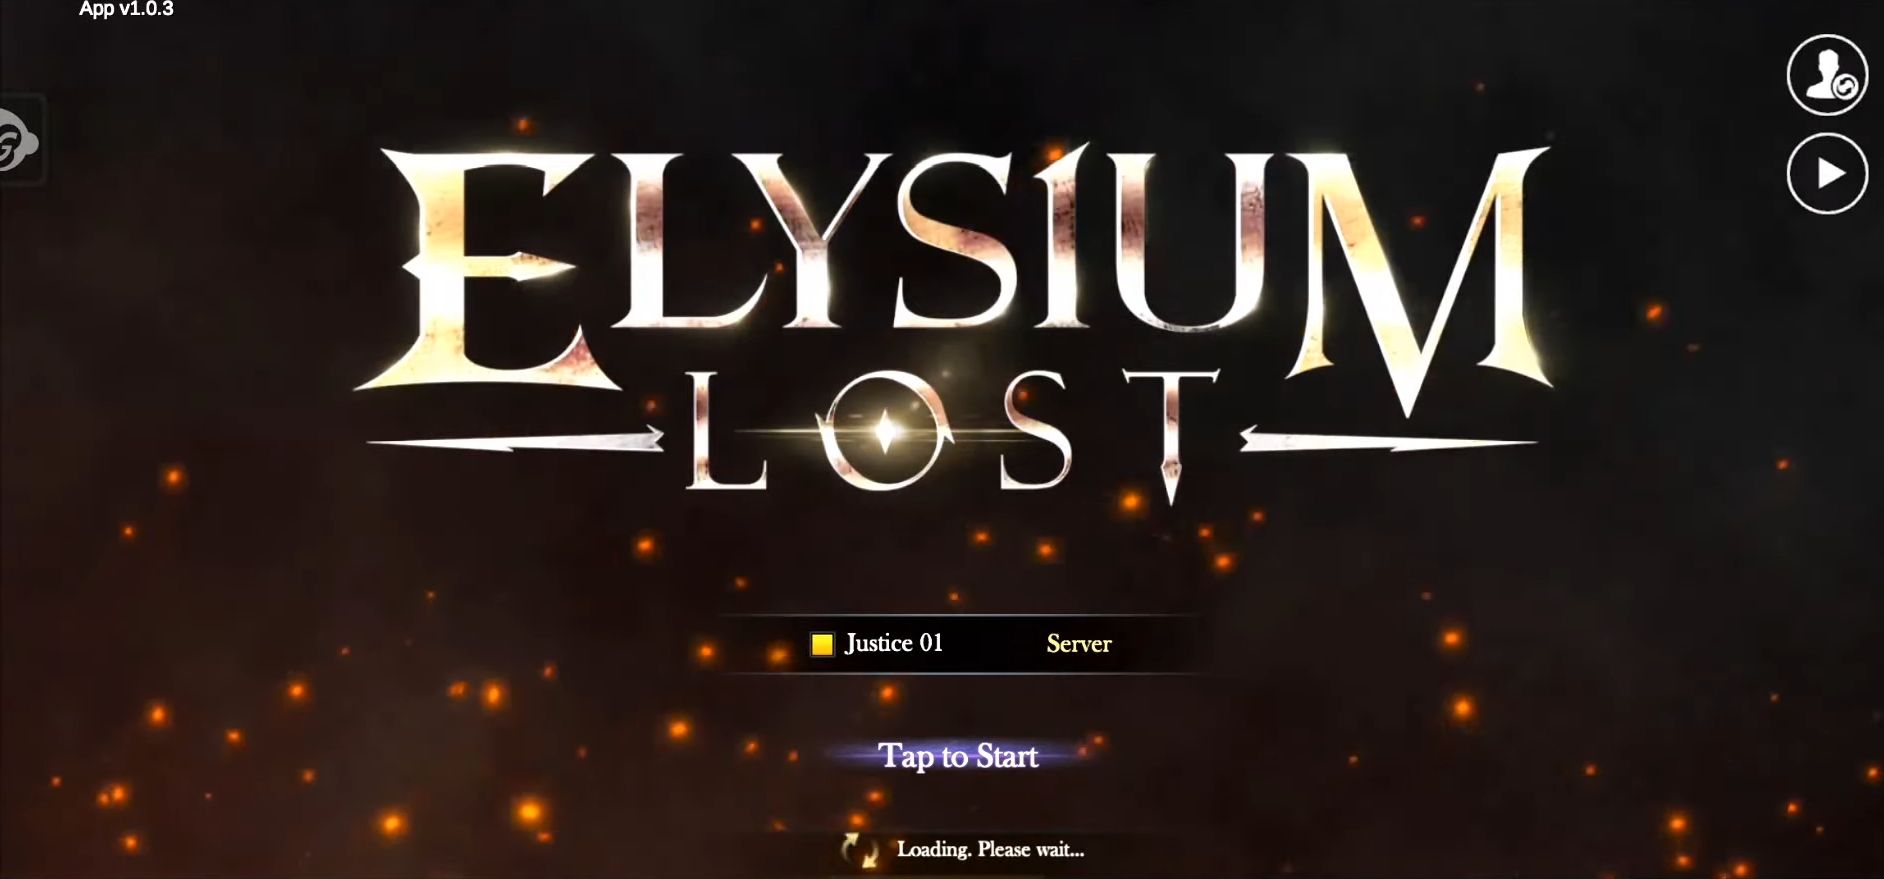 Baixar Elysium Lost para Android grátis.